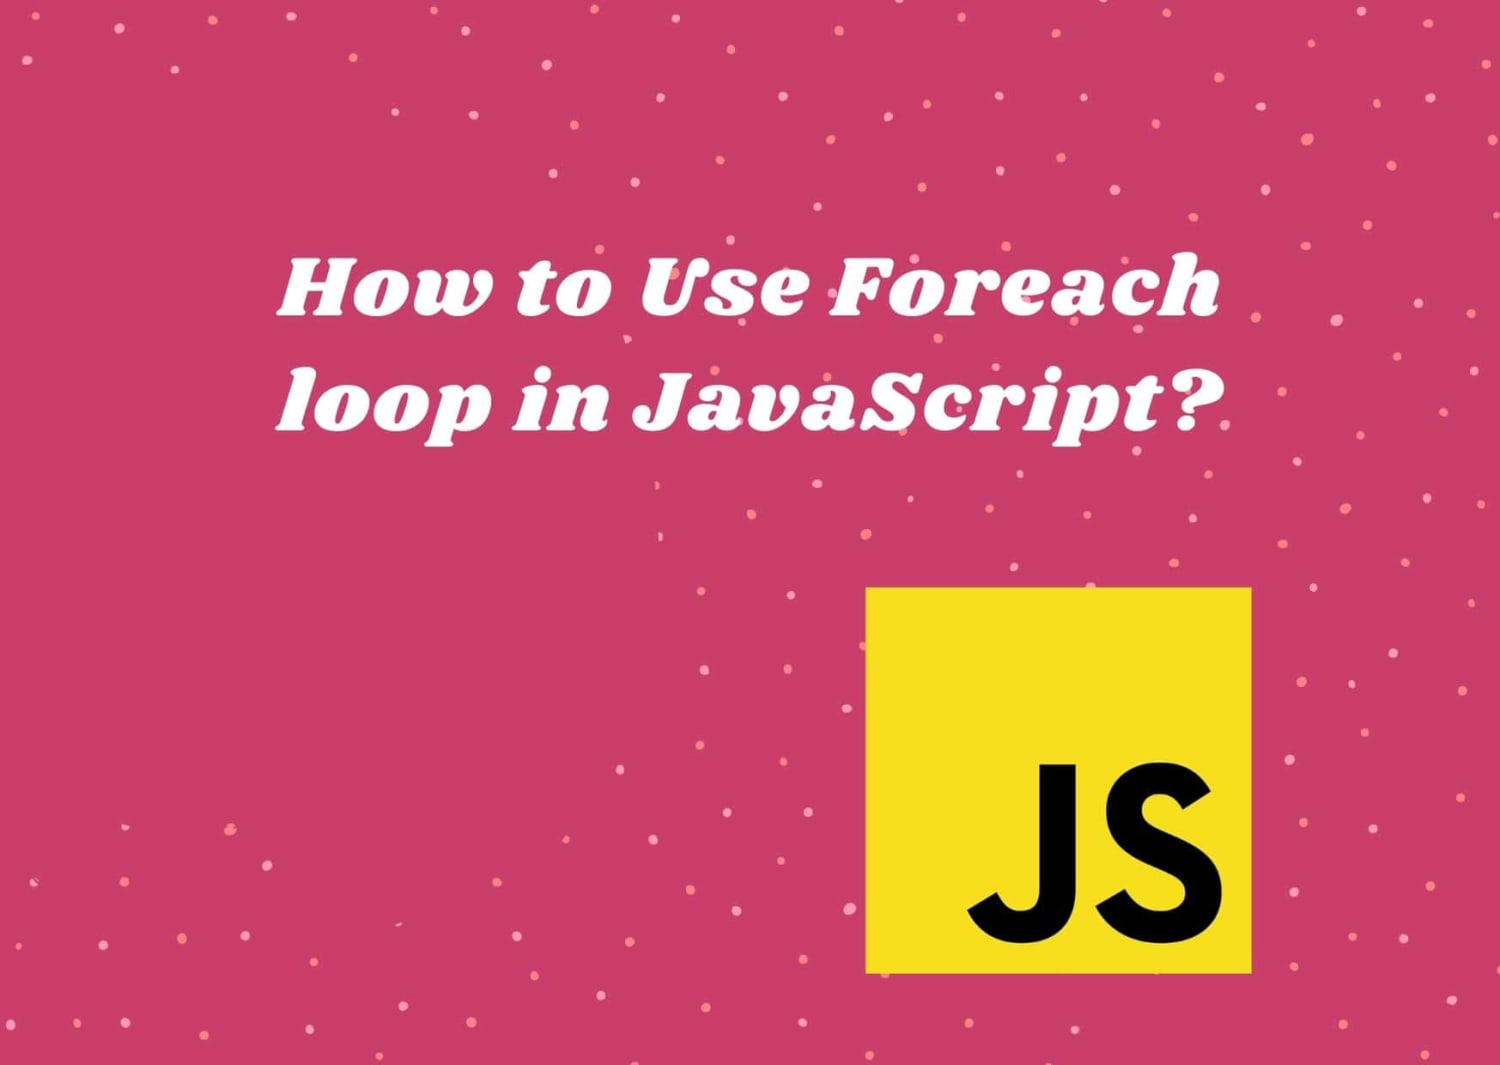 How to execute Foreach loop in JavaScript?